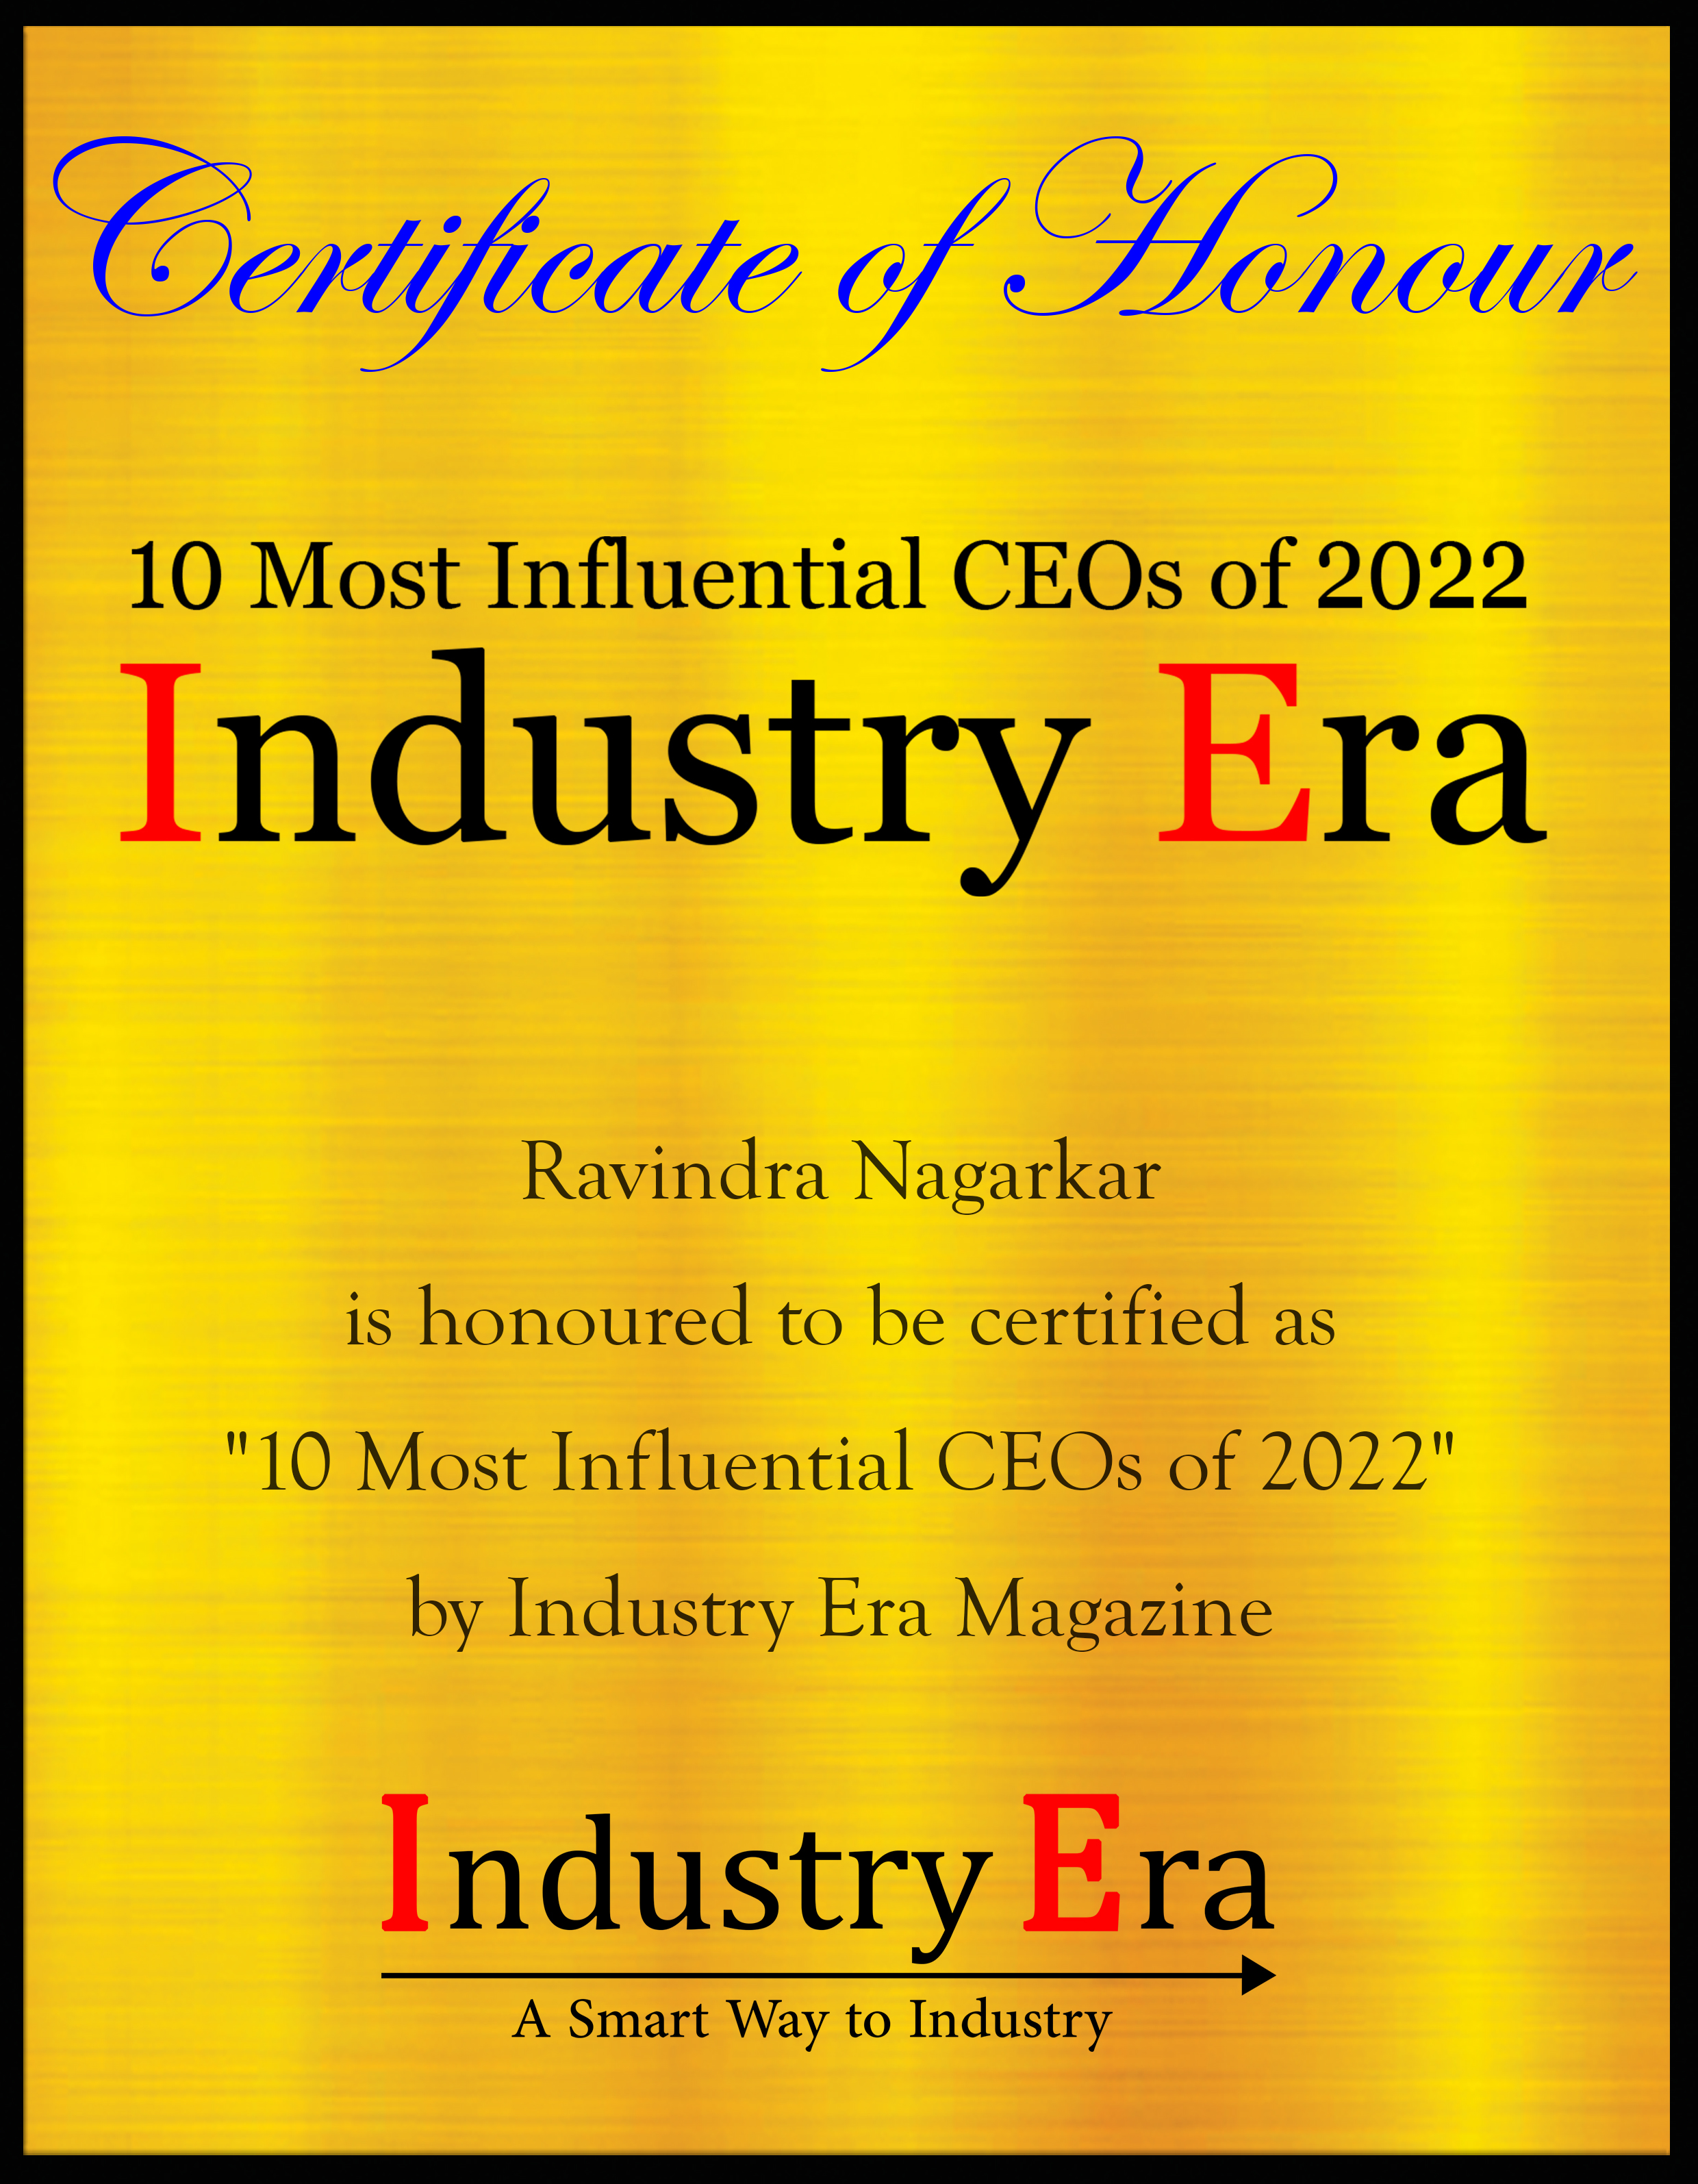 Ravindra Nagarkarn, CEO of Kalyani Technoforge Certificate